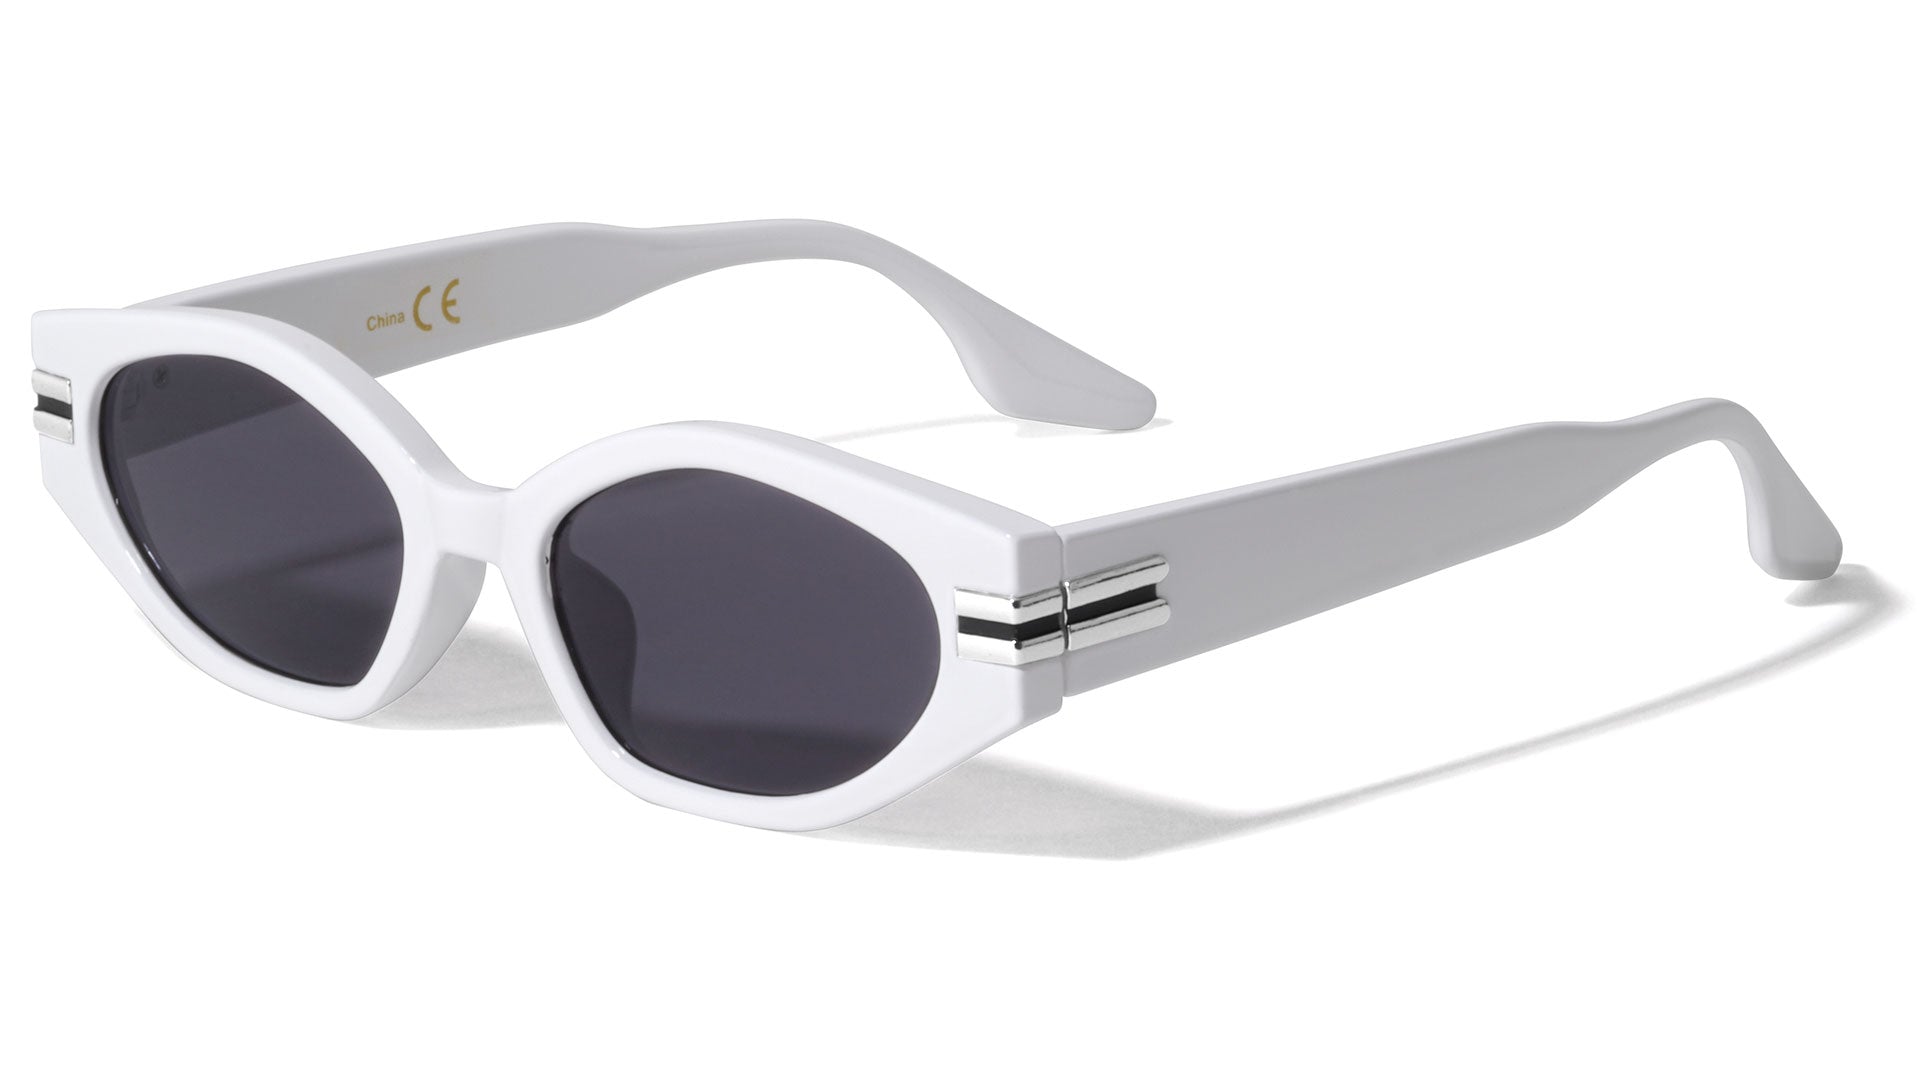 BP0226 Metallic Oval Wholesale Sunglasses - Frontier Fashion, Inc.